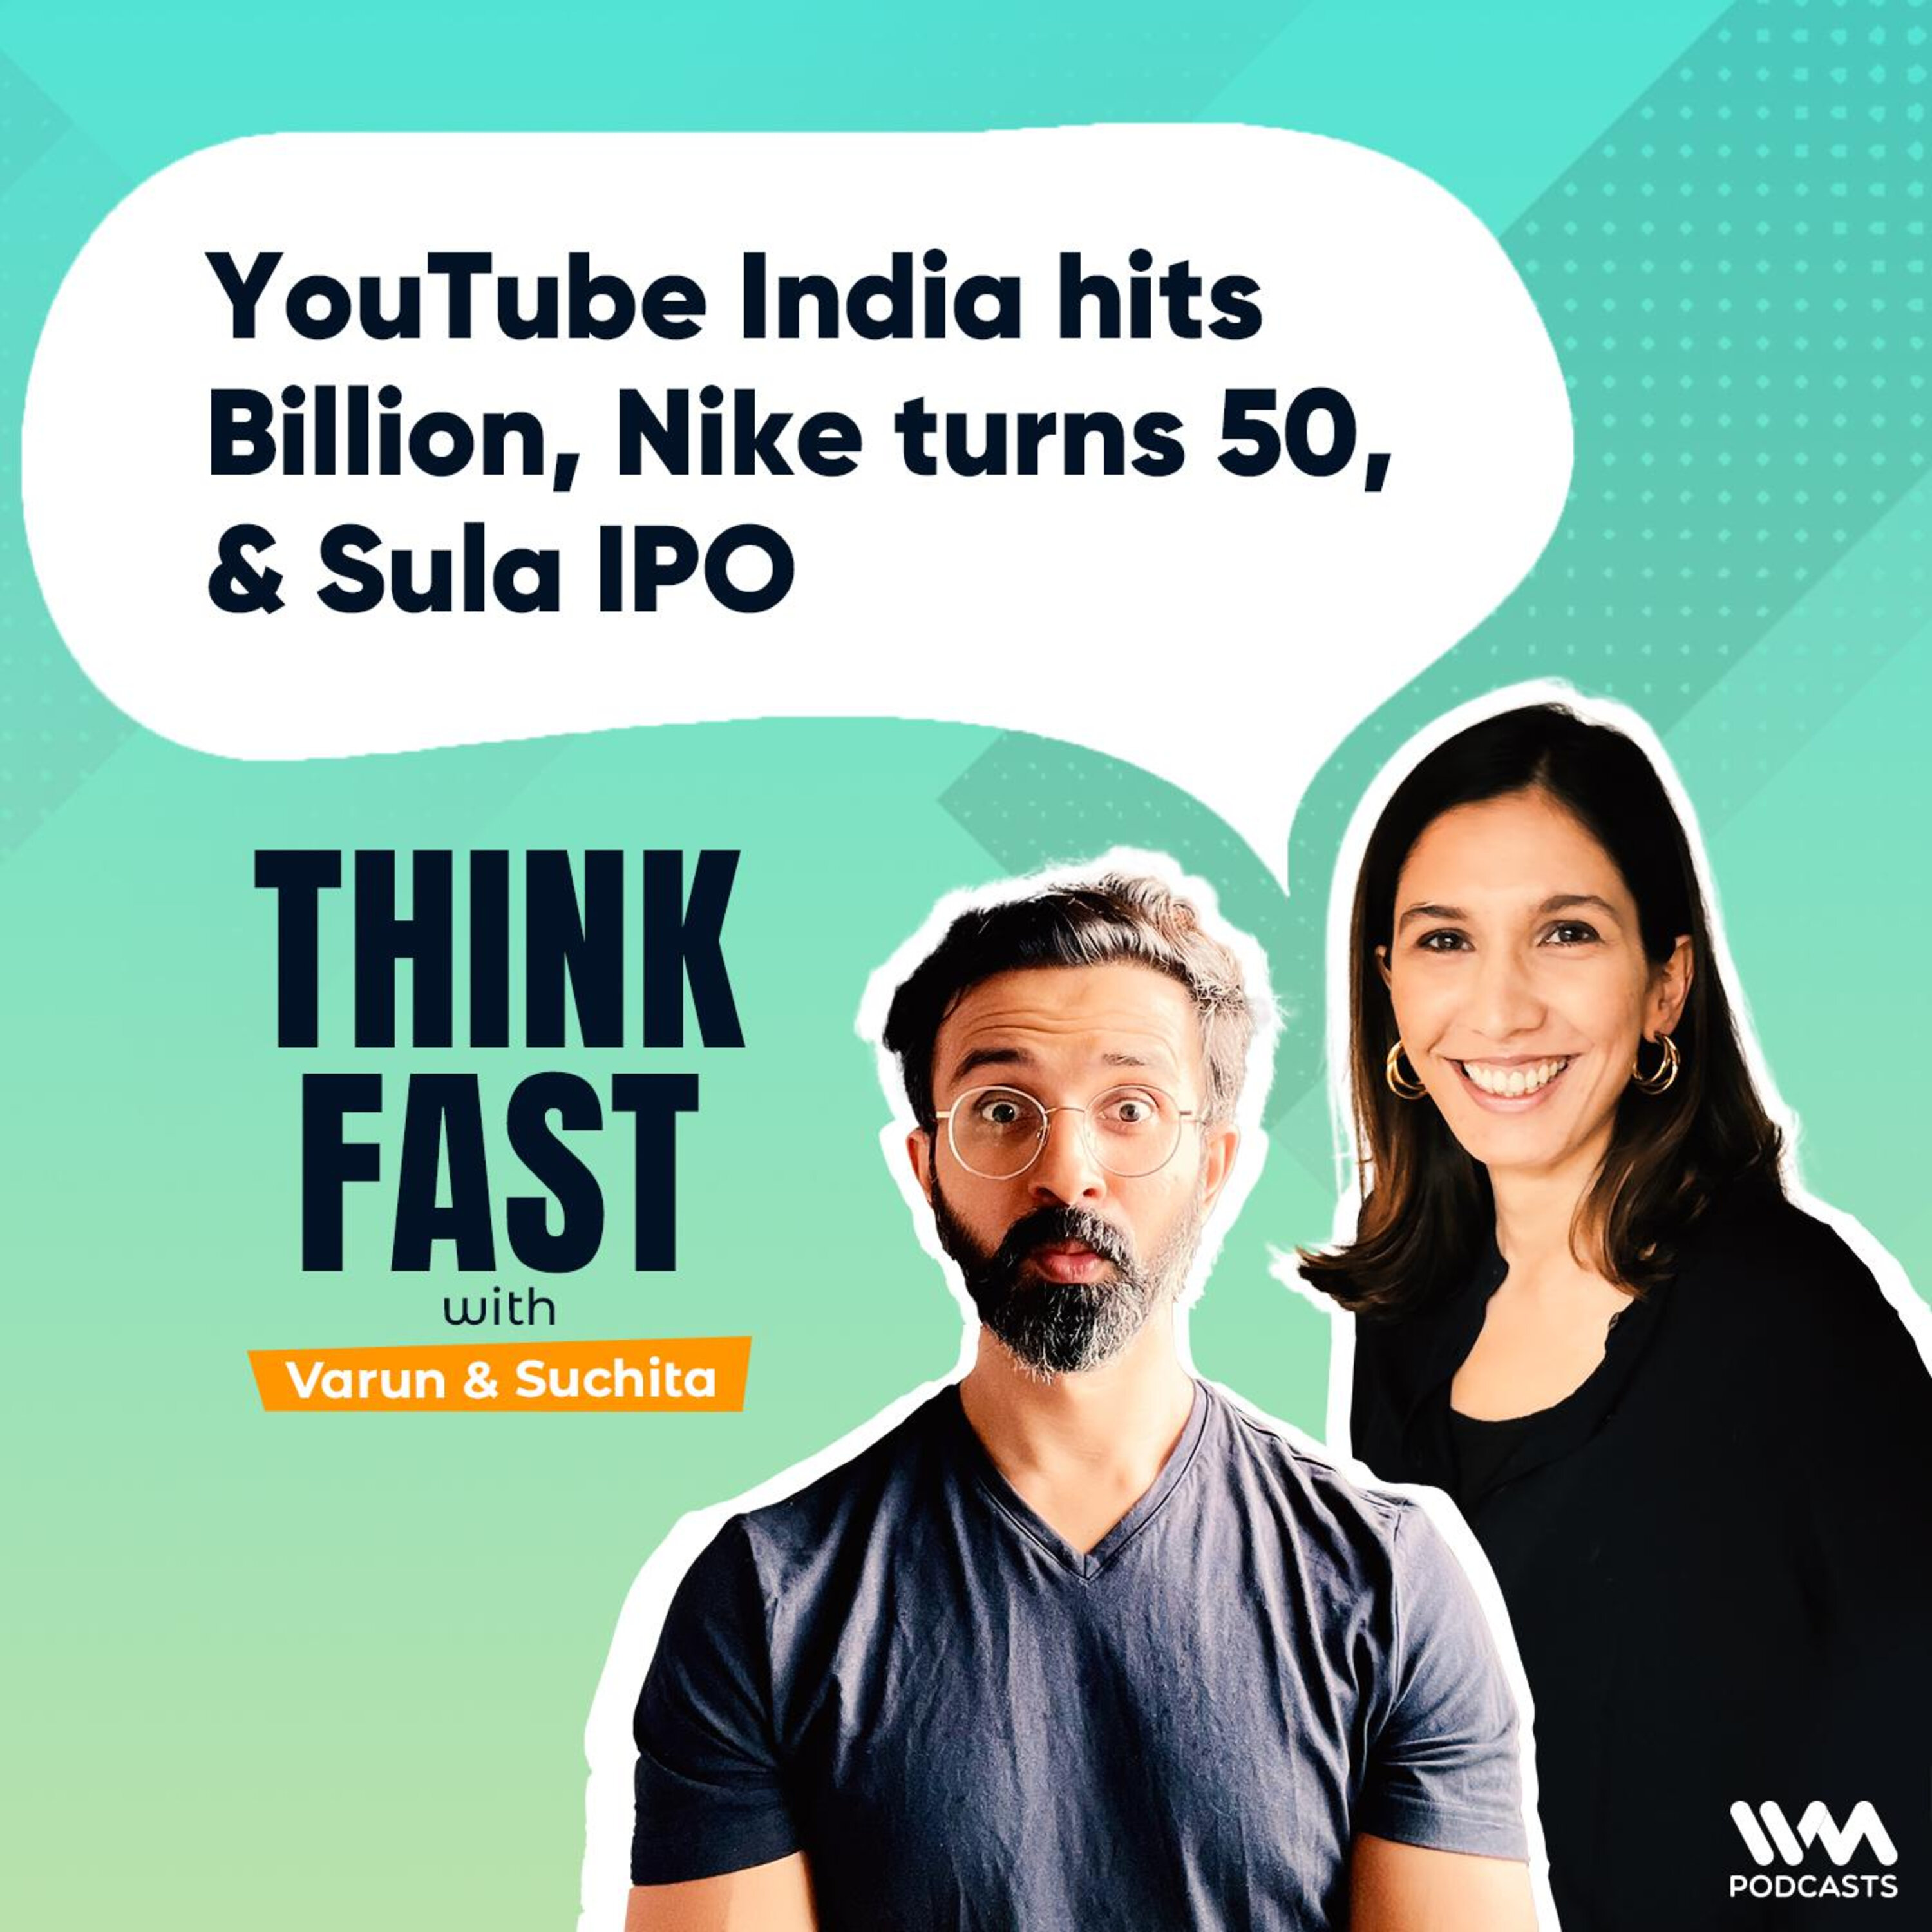 YouTube India hits Billion, Nike turns 50, & Sula IPO